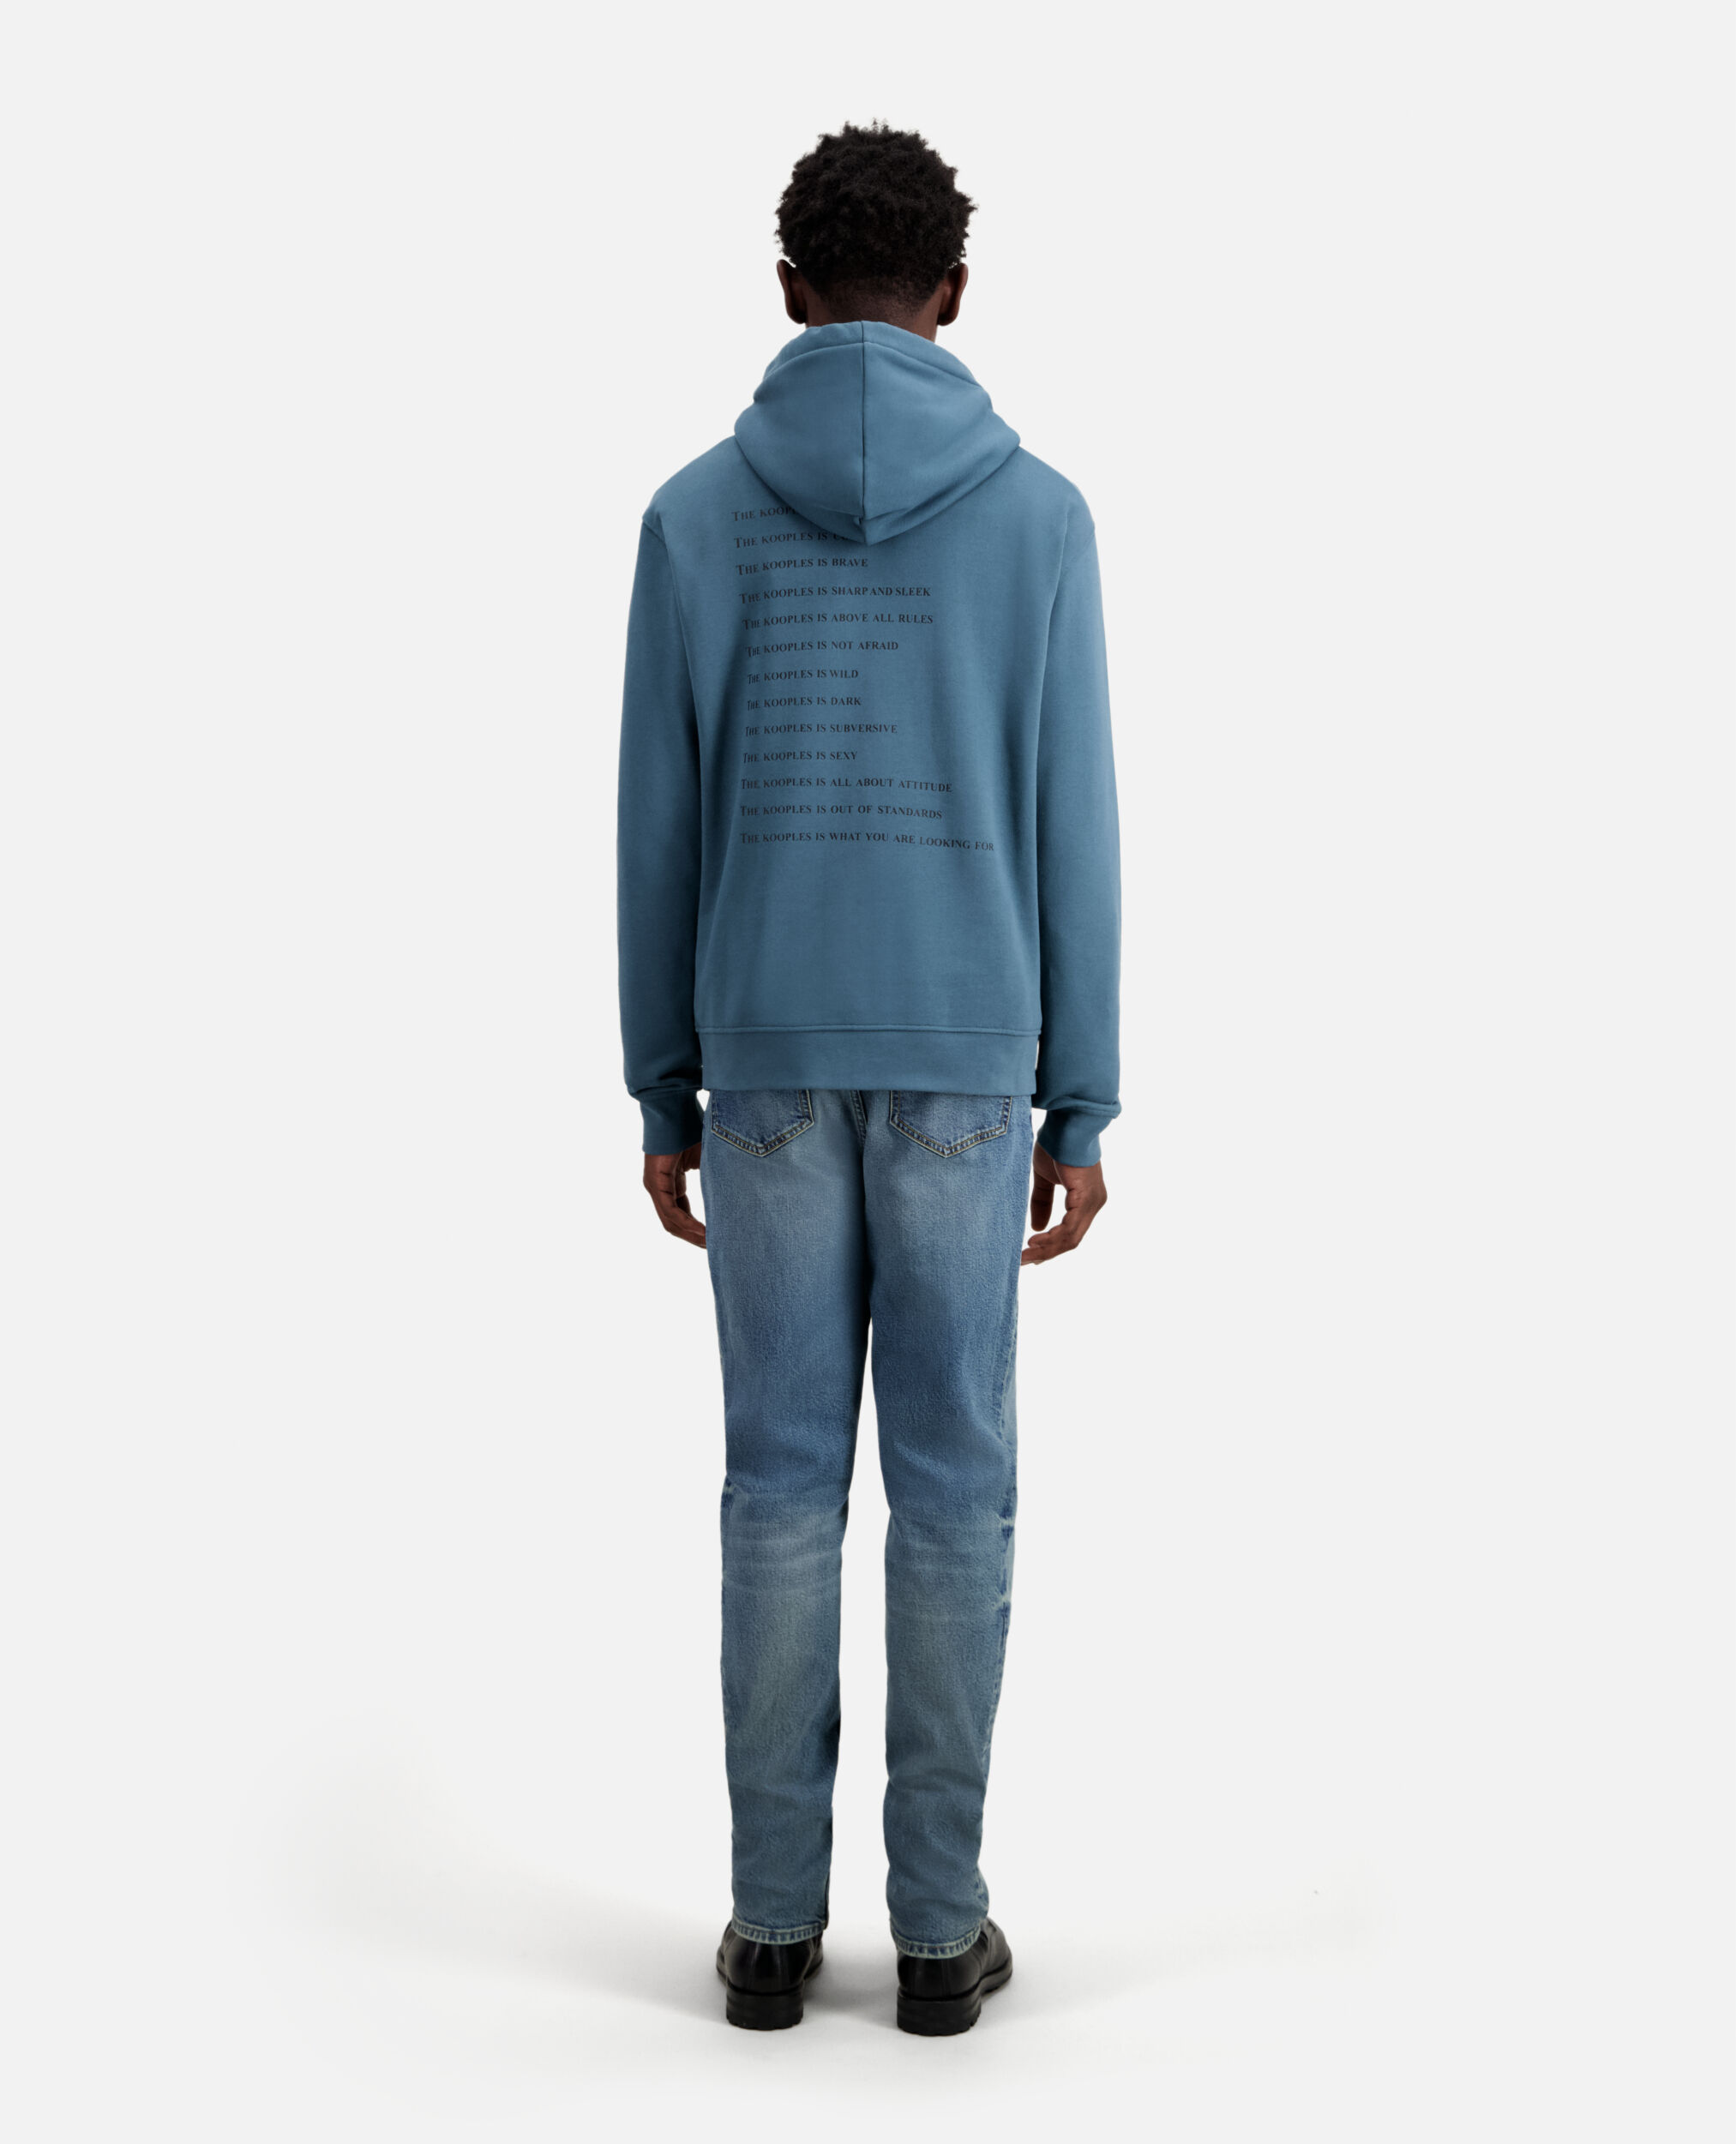 Sweatshirt à capuche What is bleu profond, BLUE PETROL, hi-res image number null